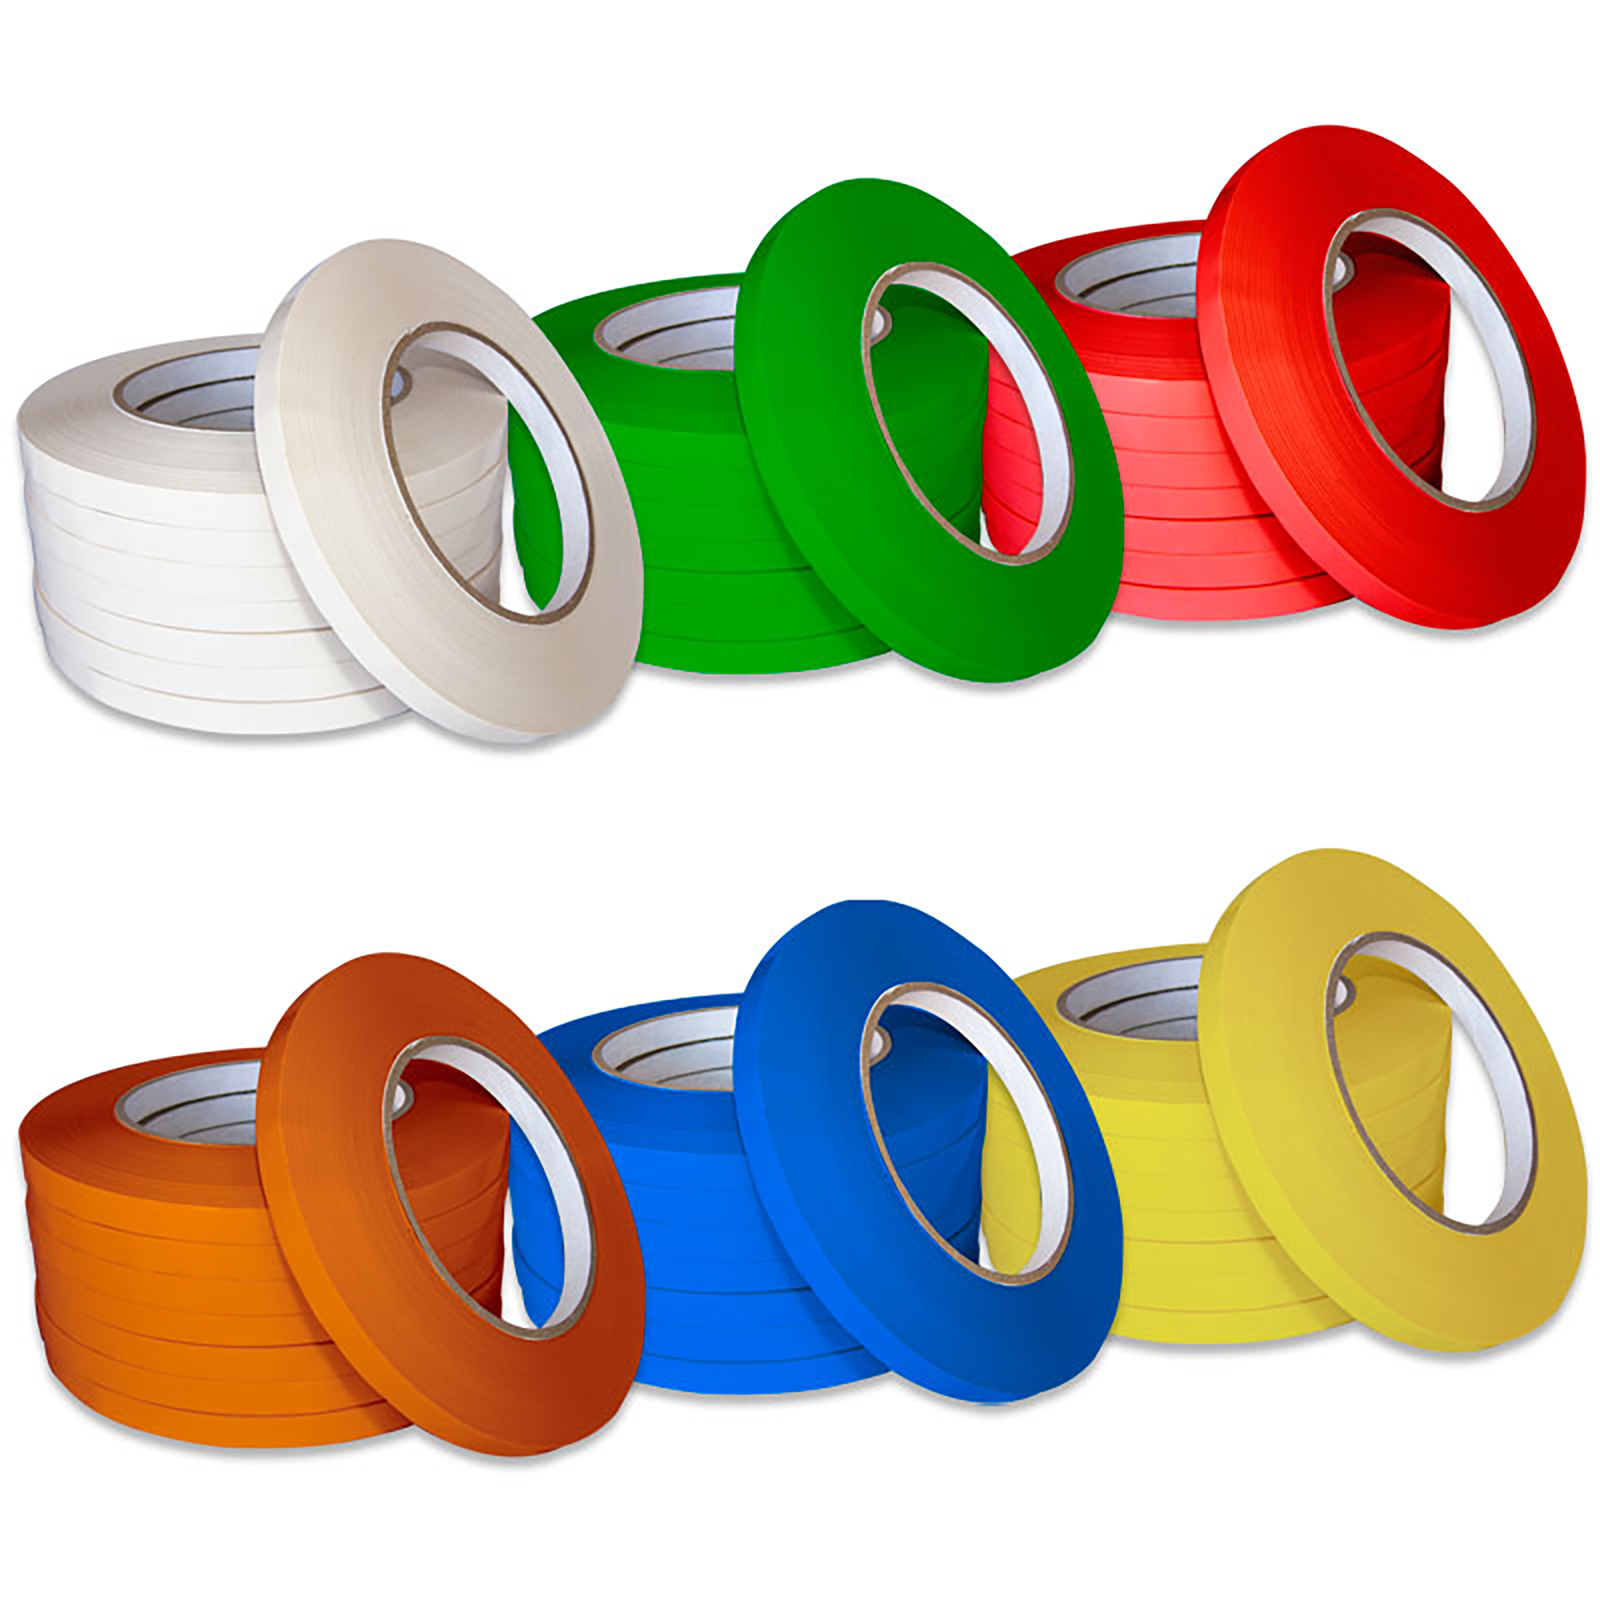 Manual Bag Taper with 10 Yellow Self-Adhesive 3/8” Tape Rolls